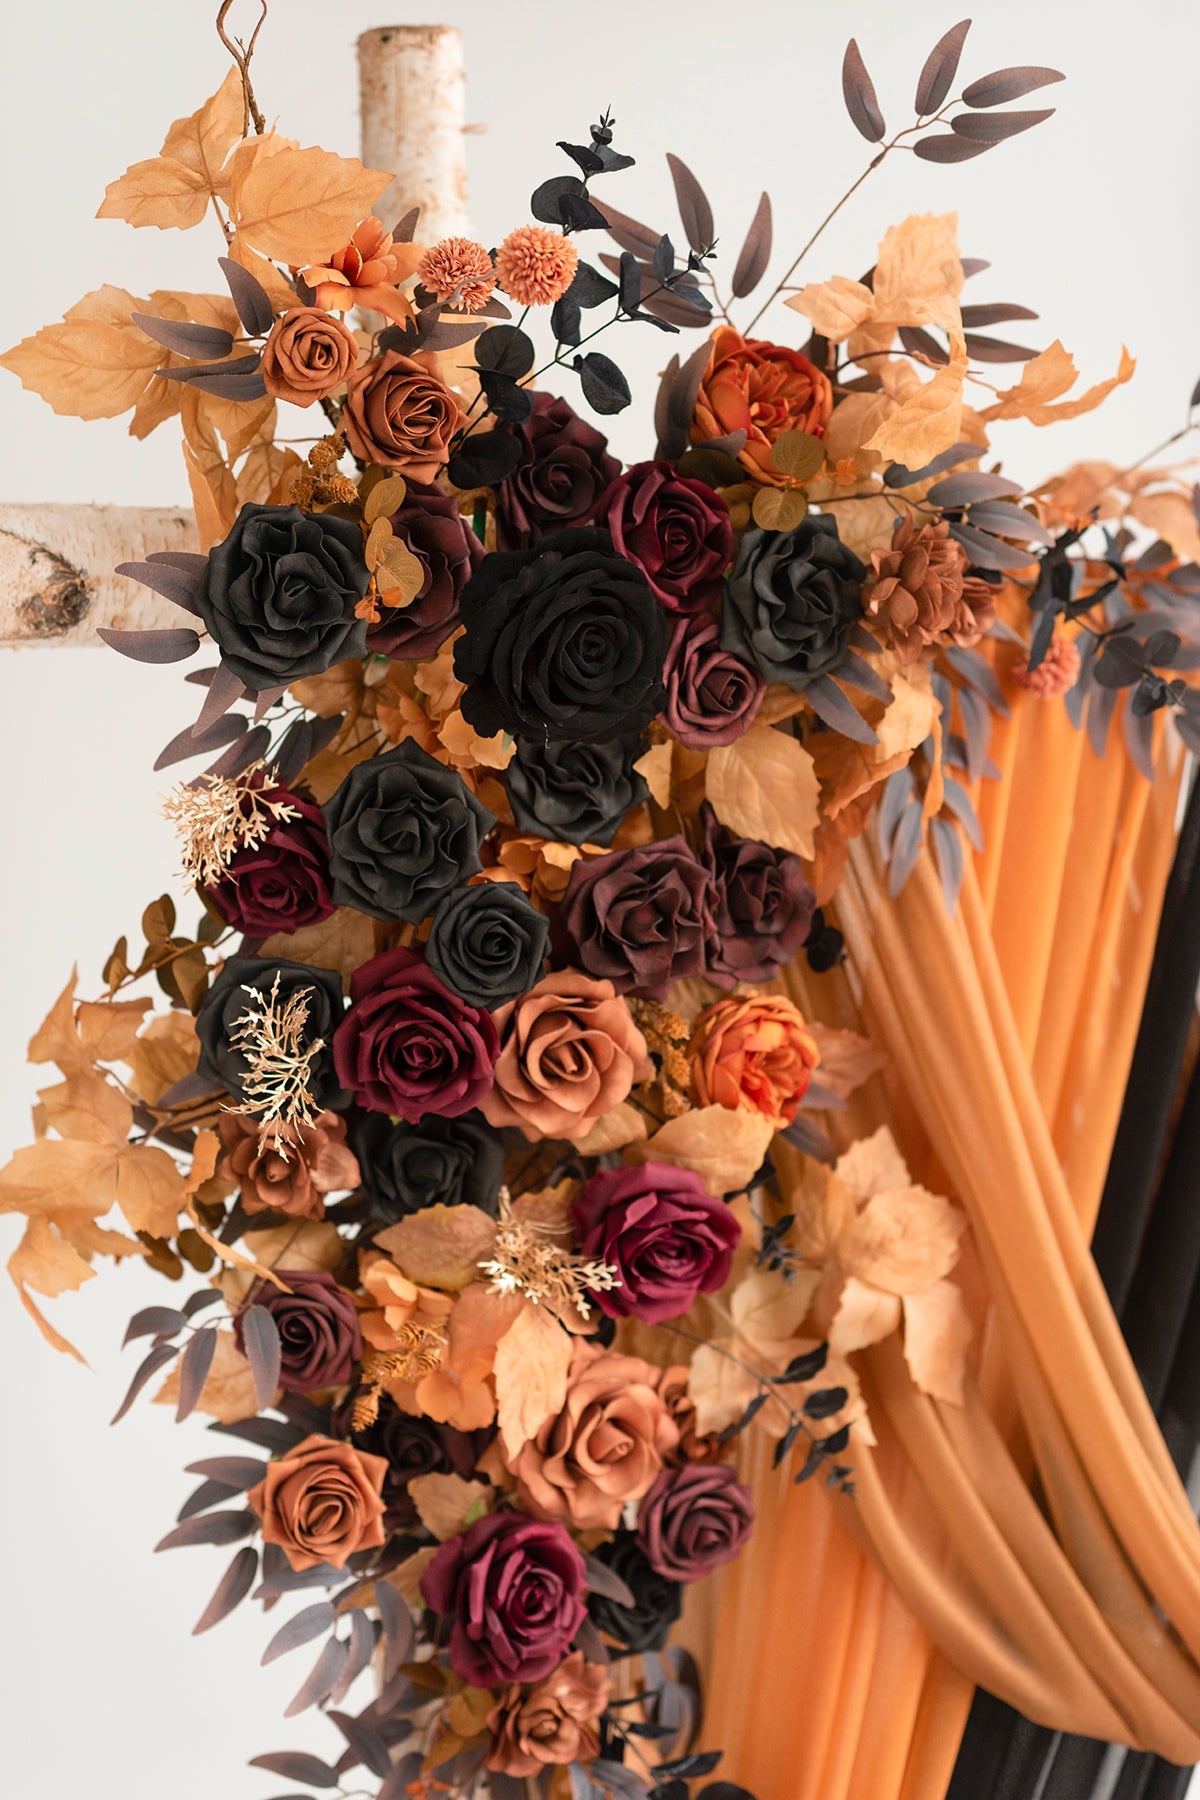 Flash Sale | Flower Arch Decor with Drapes in Black & Pumpkin Orange